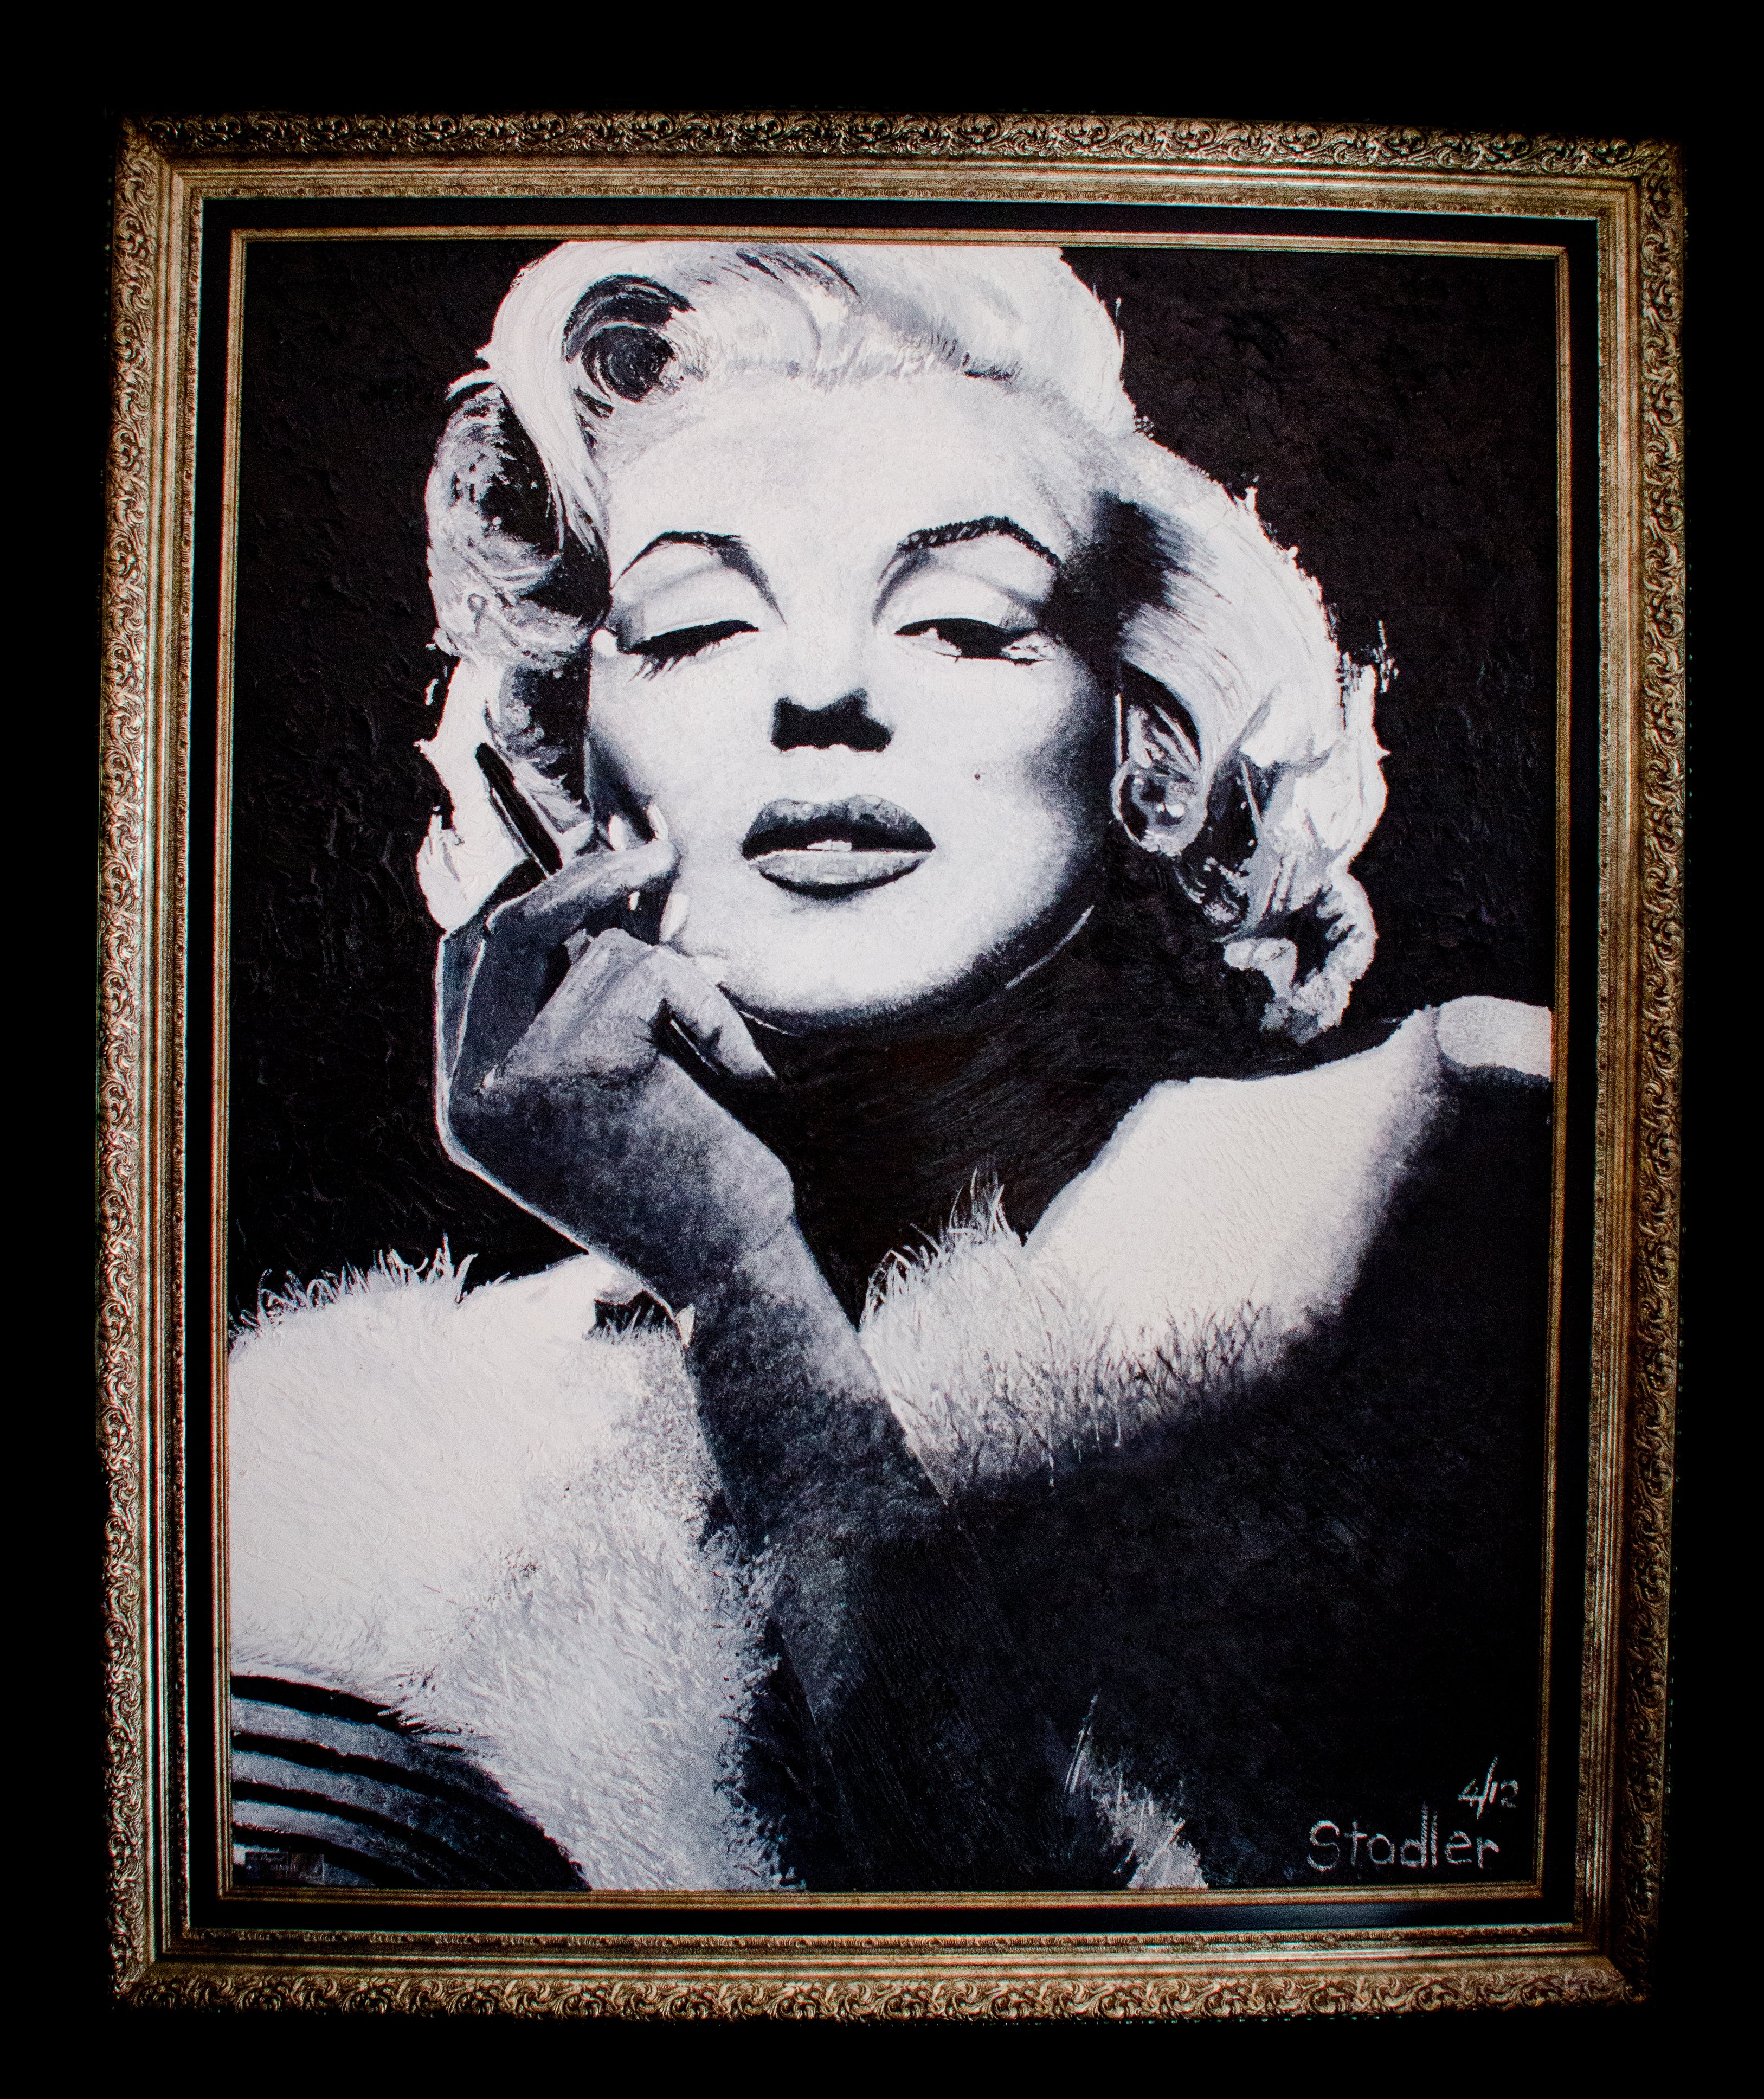 S1204 - Marilyn Monroe